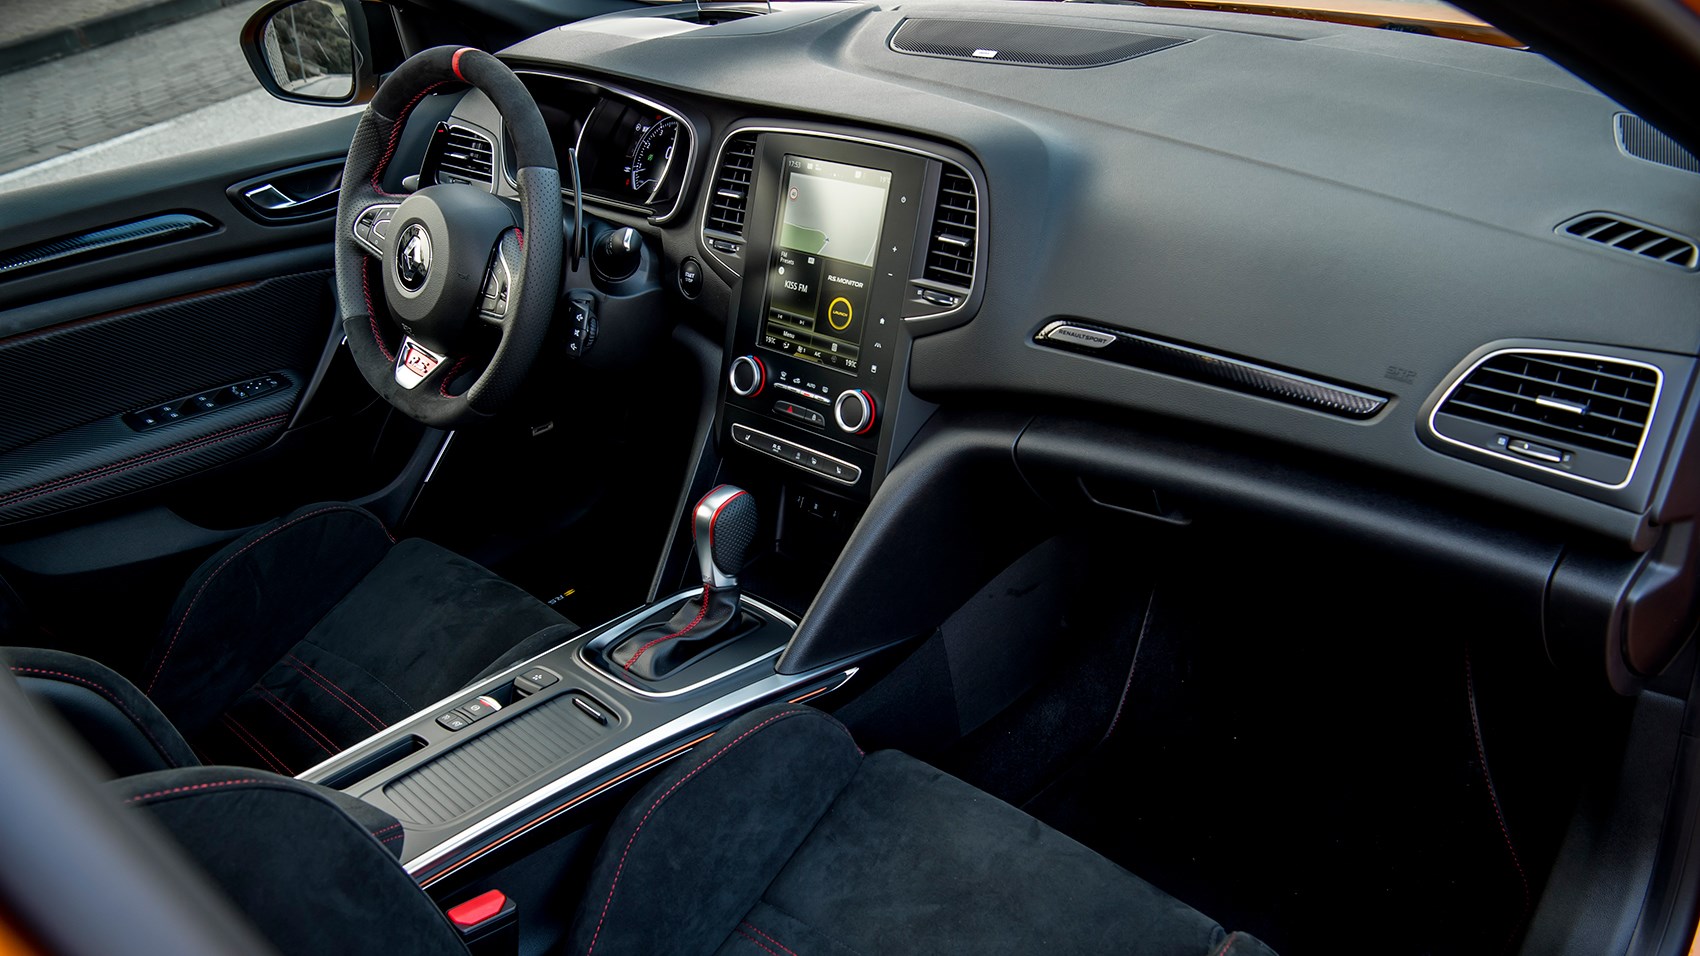 Renault Megane RS interior